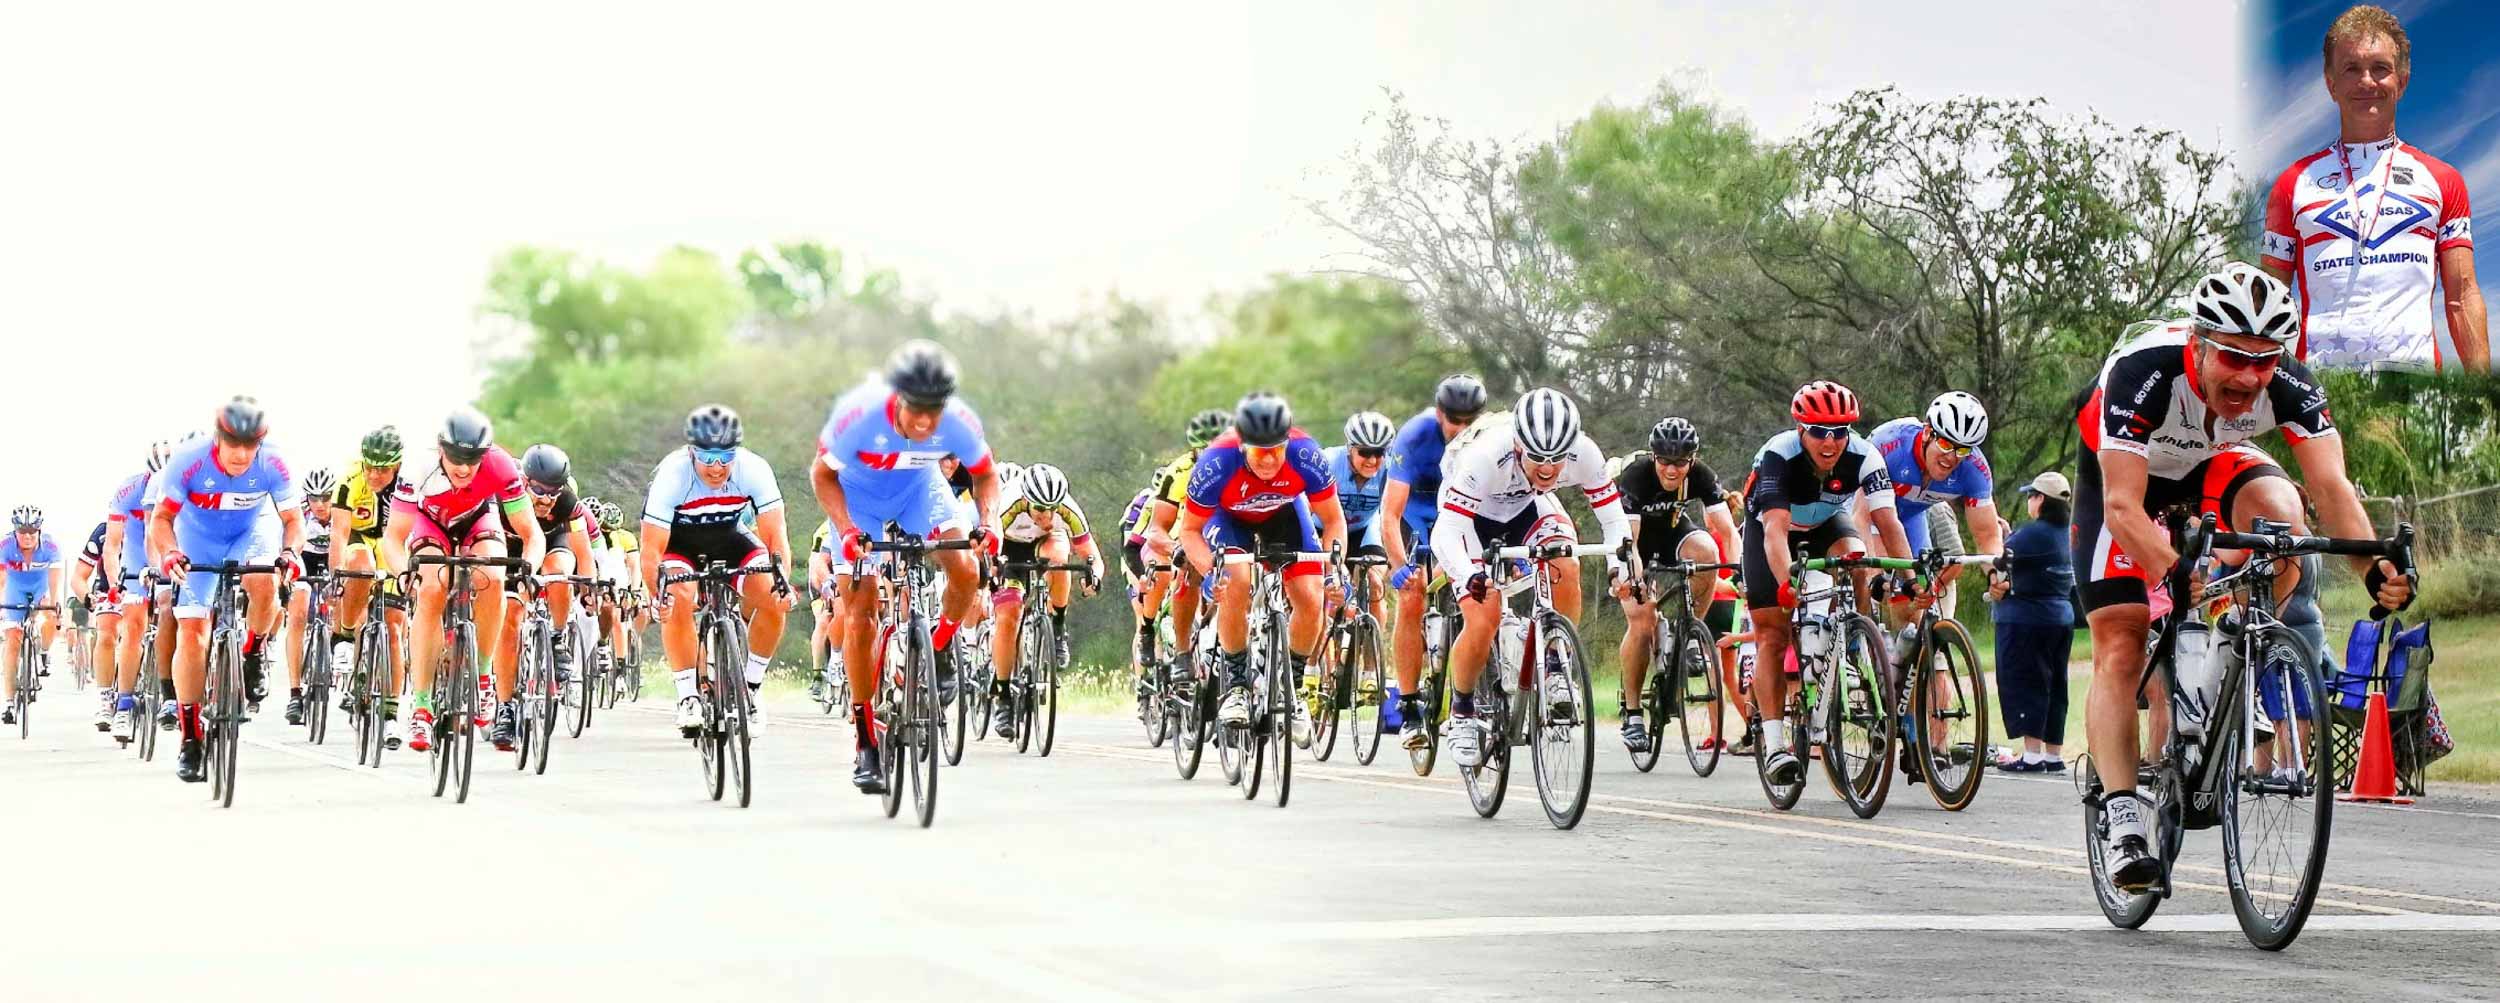 Cílový dojezd a vyhraný spurt cyklistického pelotonu našeho klienta Paula Komarka v silničním závodu Hotter Hell 100 v americkém Texasu